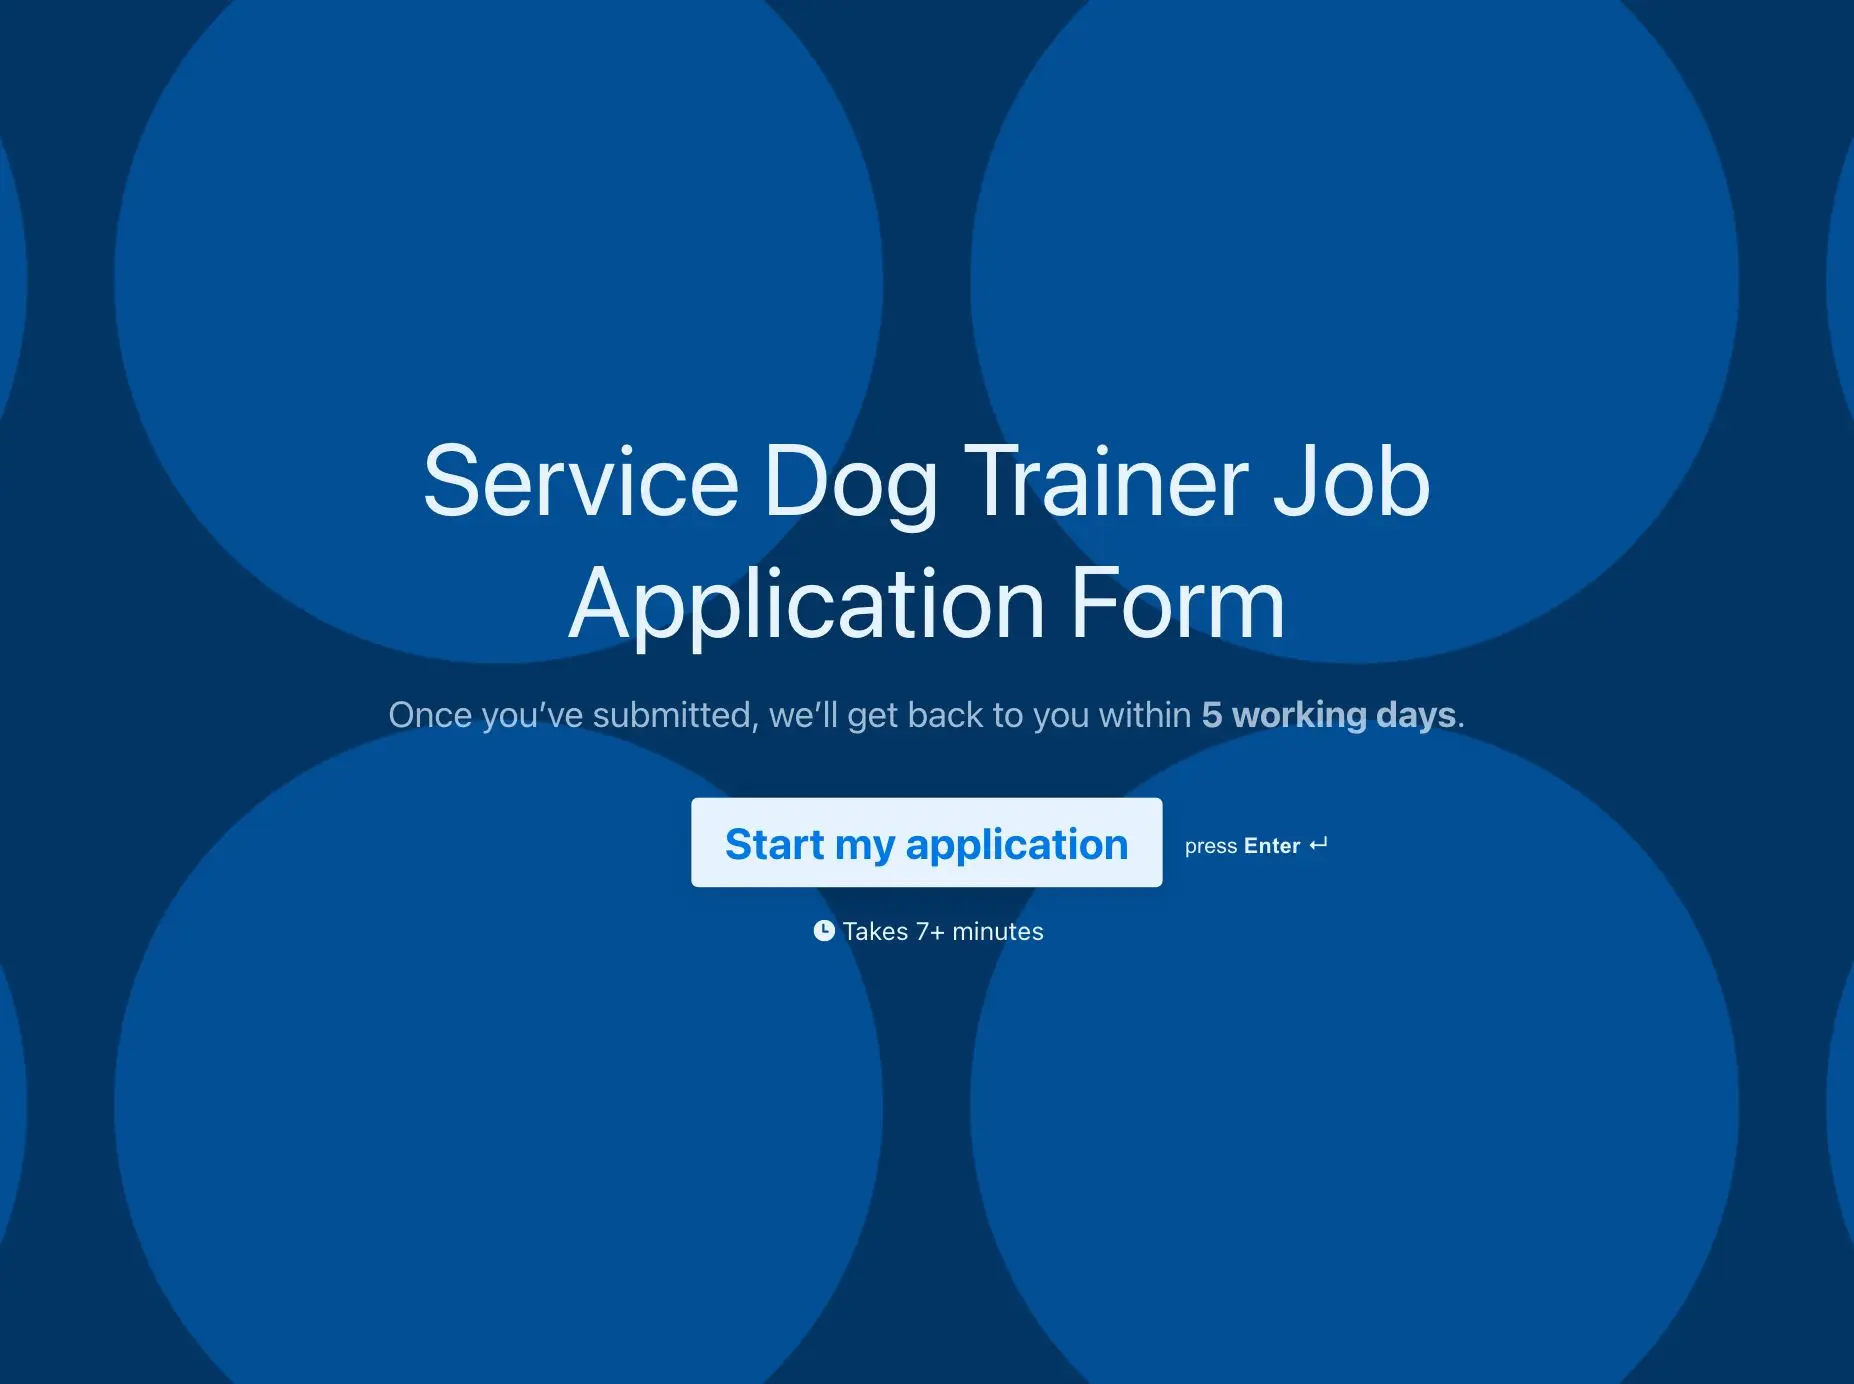 Service Dog Trainer Job Application Form Template Hero